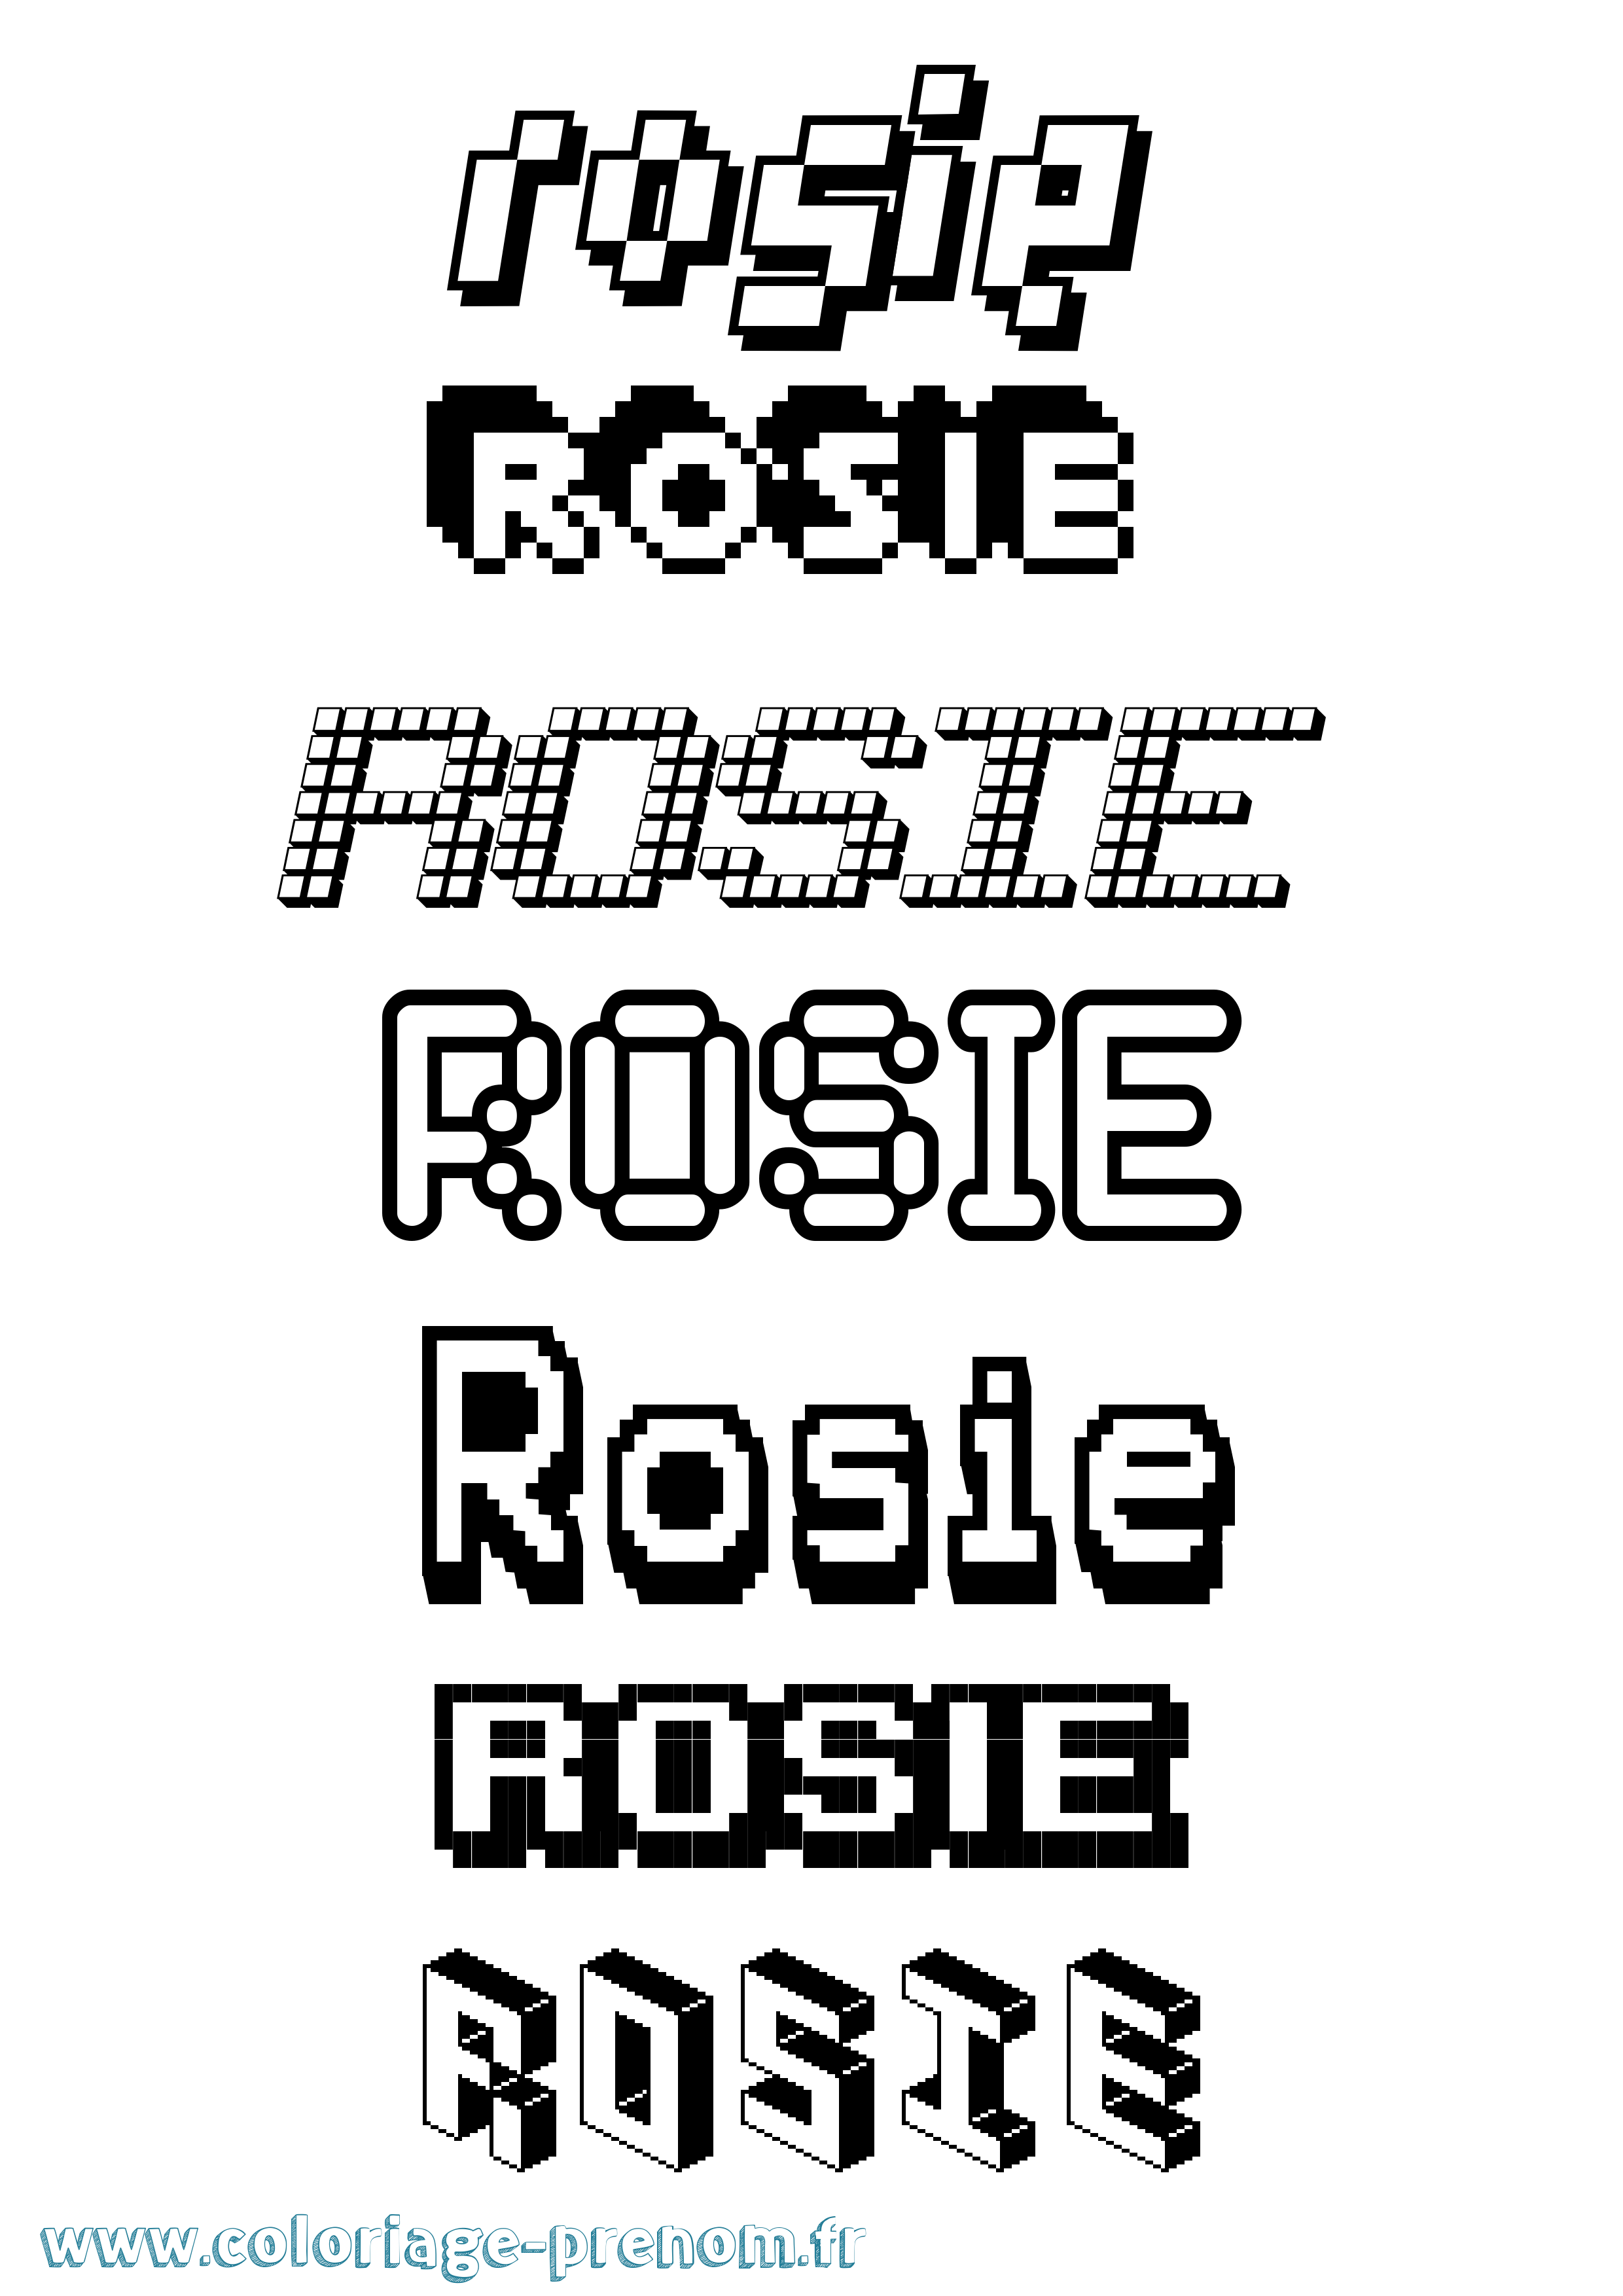 Coloriage prénom Rosie Pixel